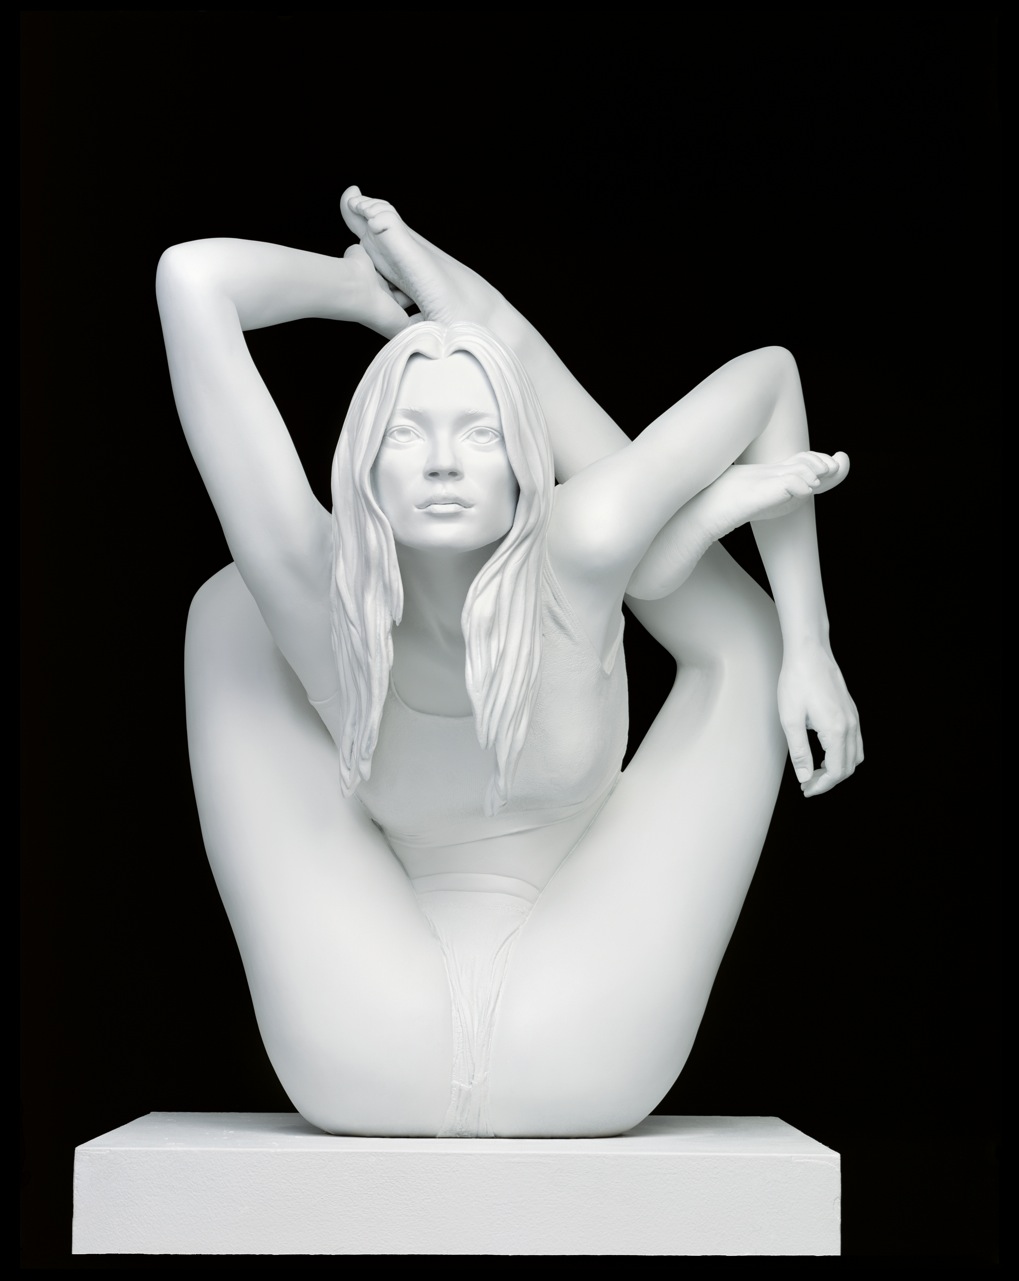 голая женская скульптура фото 62